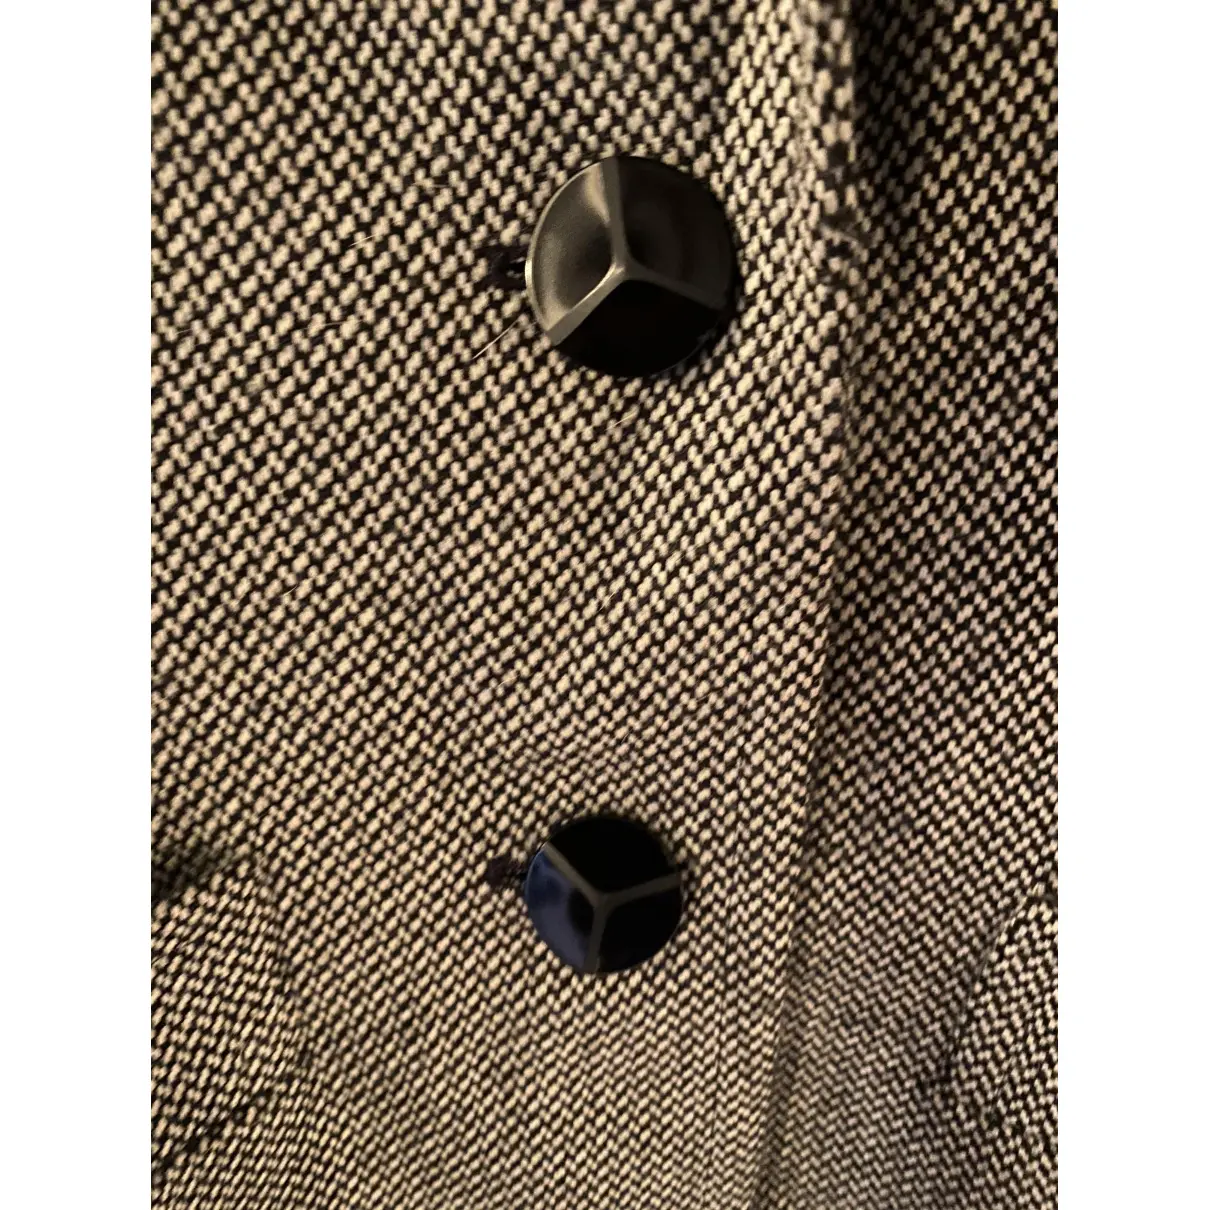 Wool suit jacket Yves Saint Laurent - Vintage